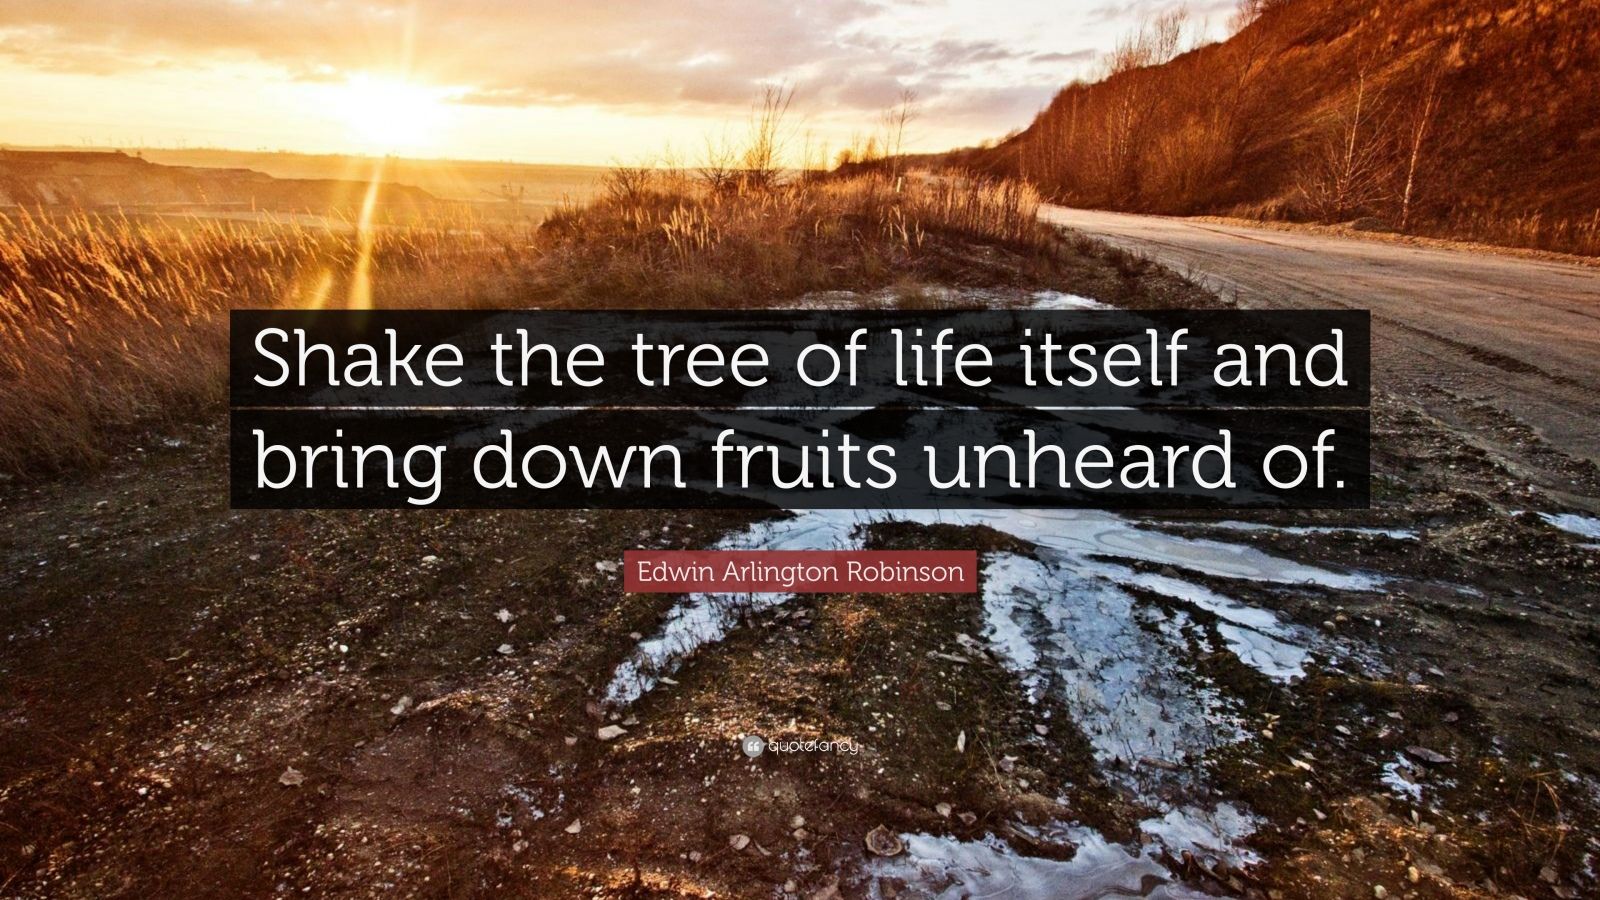 Edwin Arlington Robinson Quote: “Shake the tree of life itself and ...